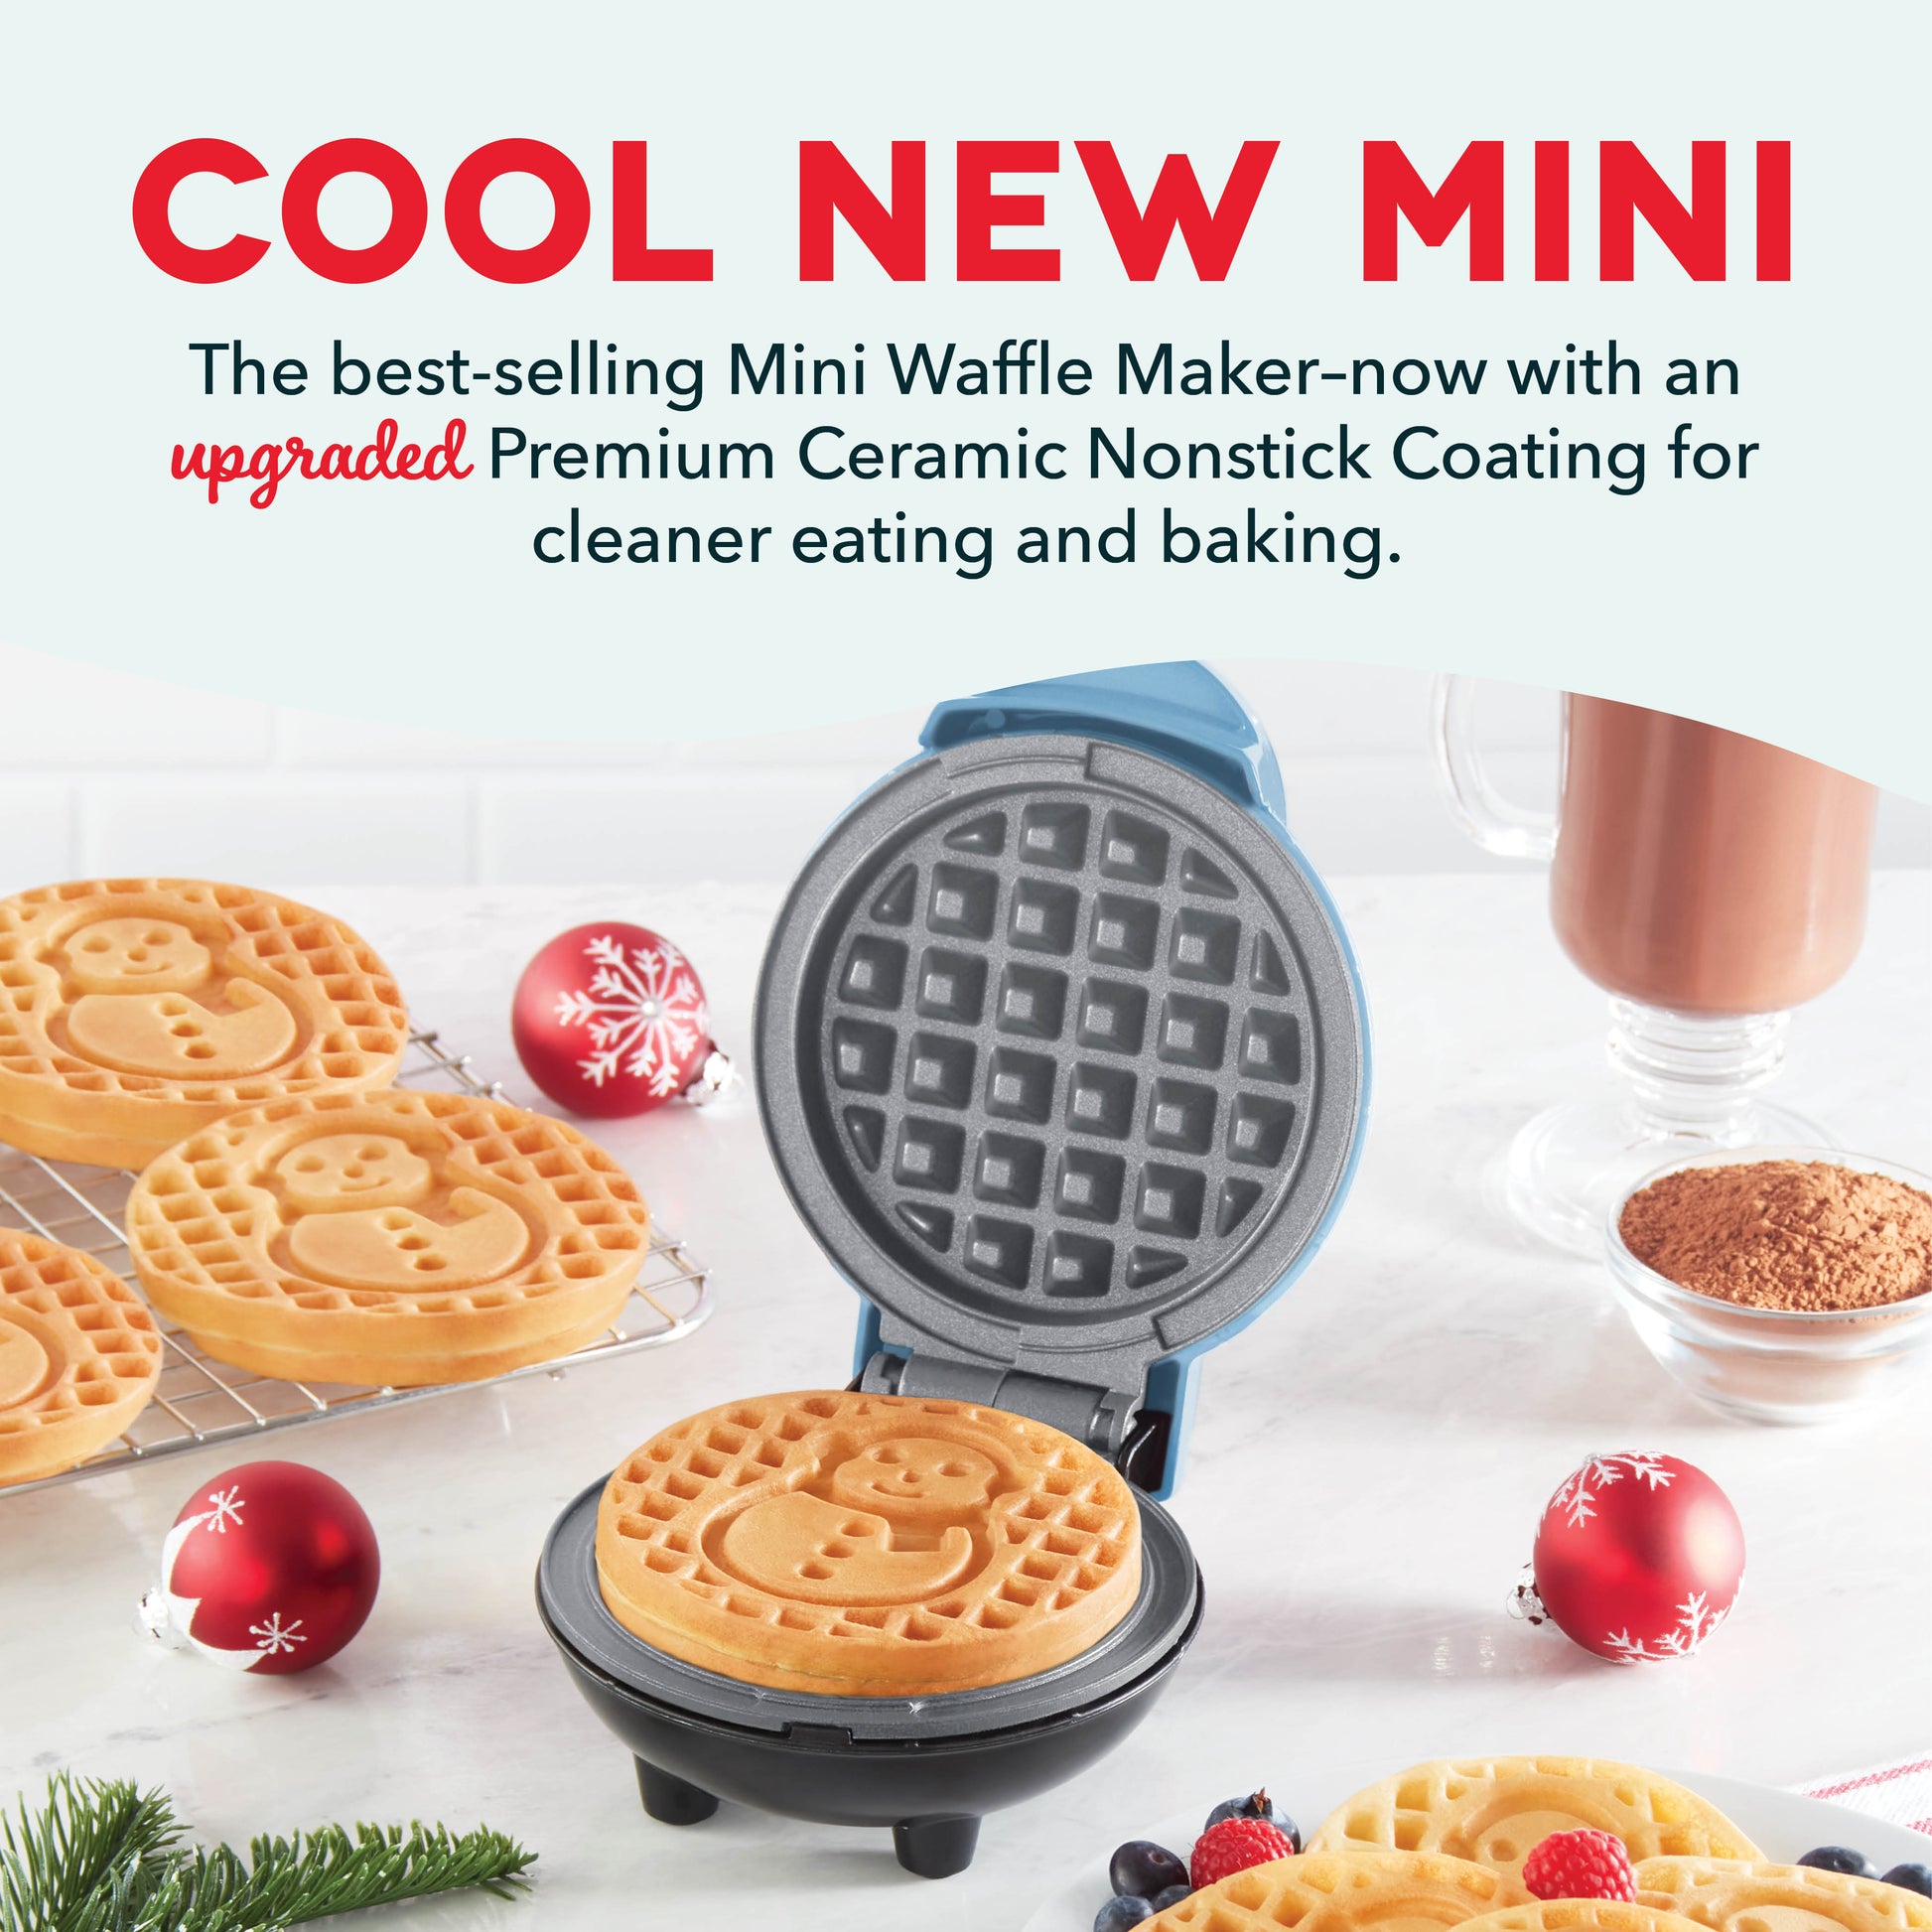 Dash Snowflake Mini Waffle Maker in Blue